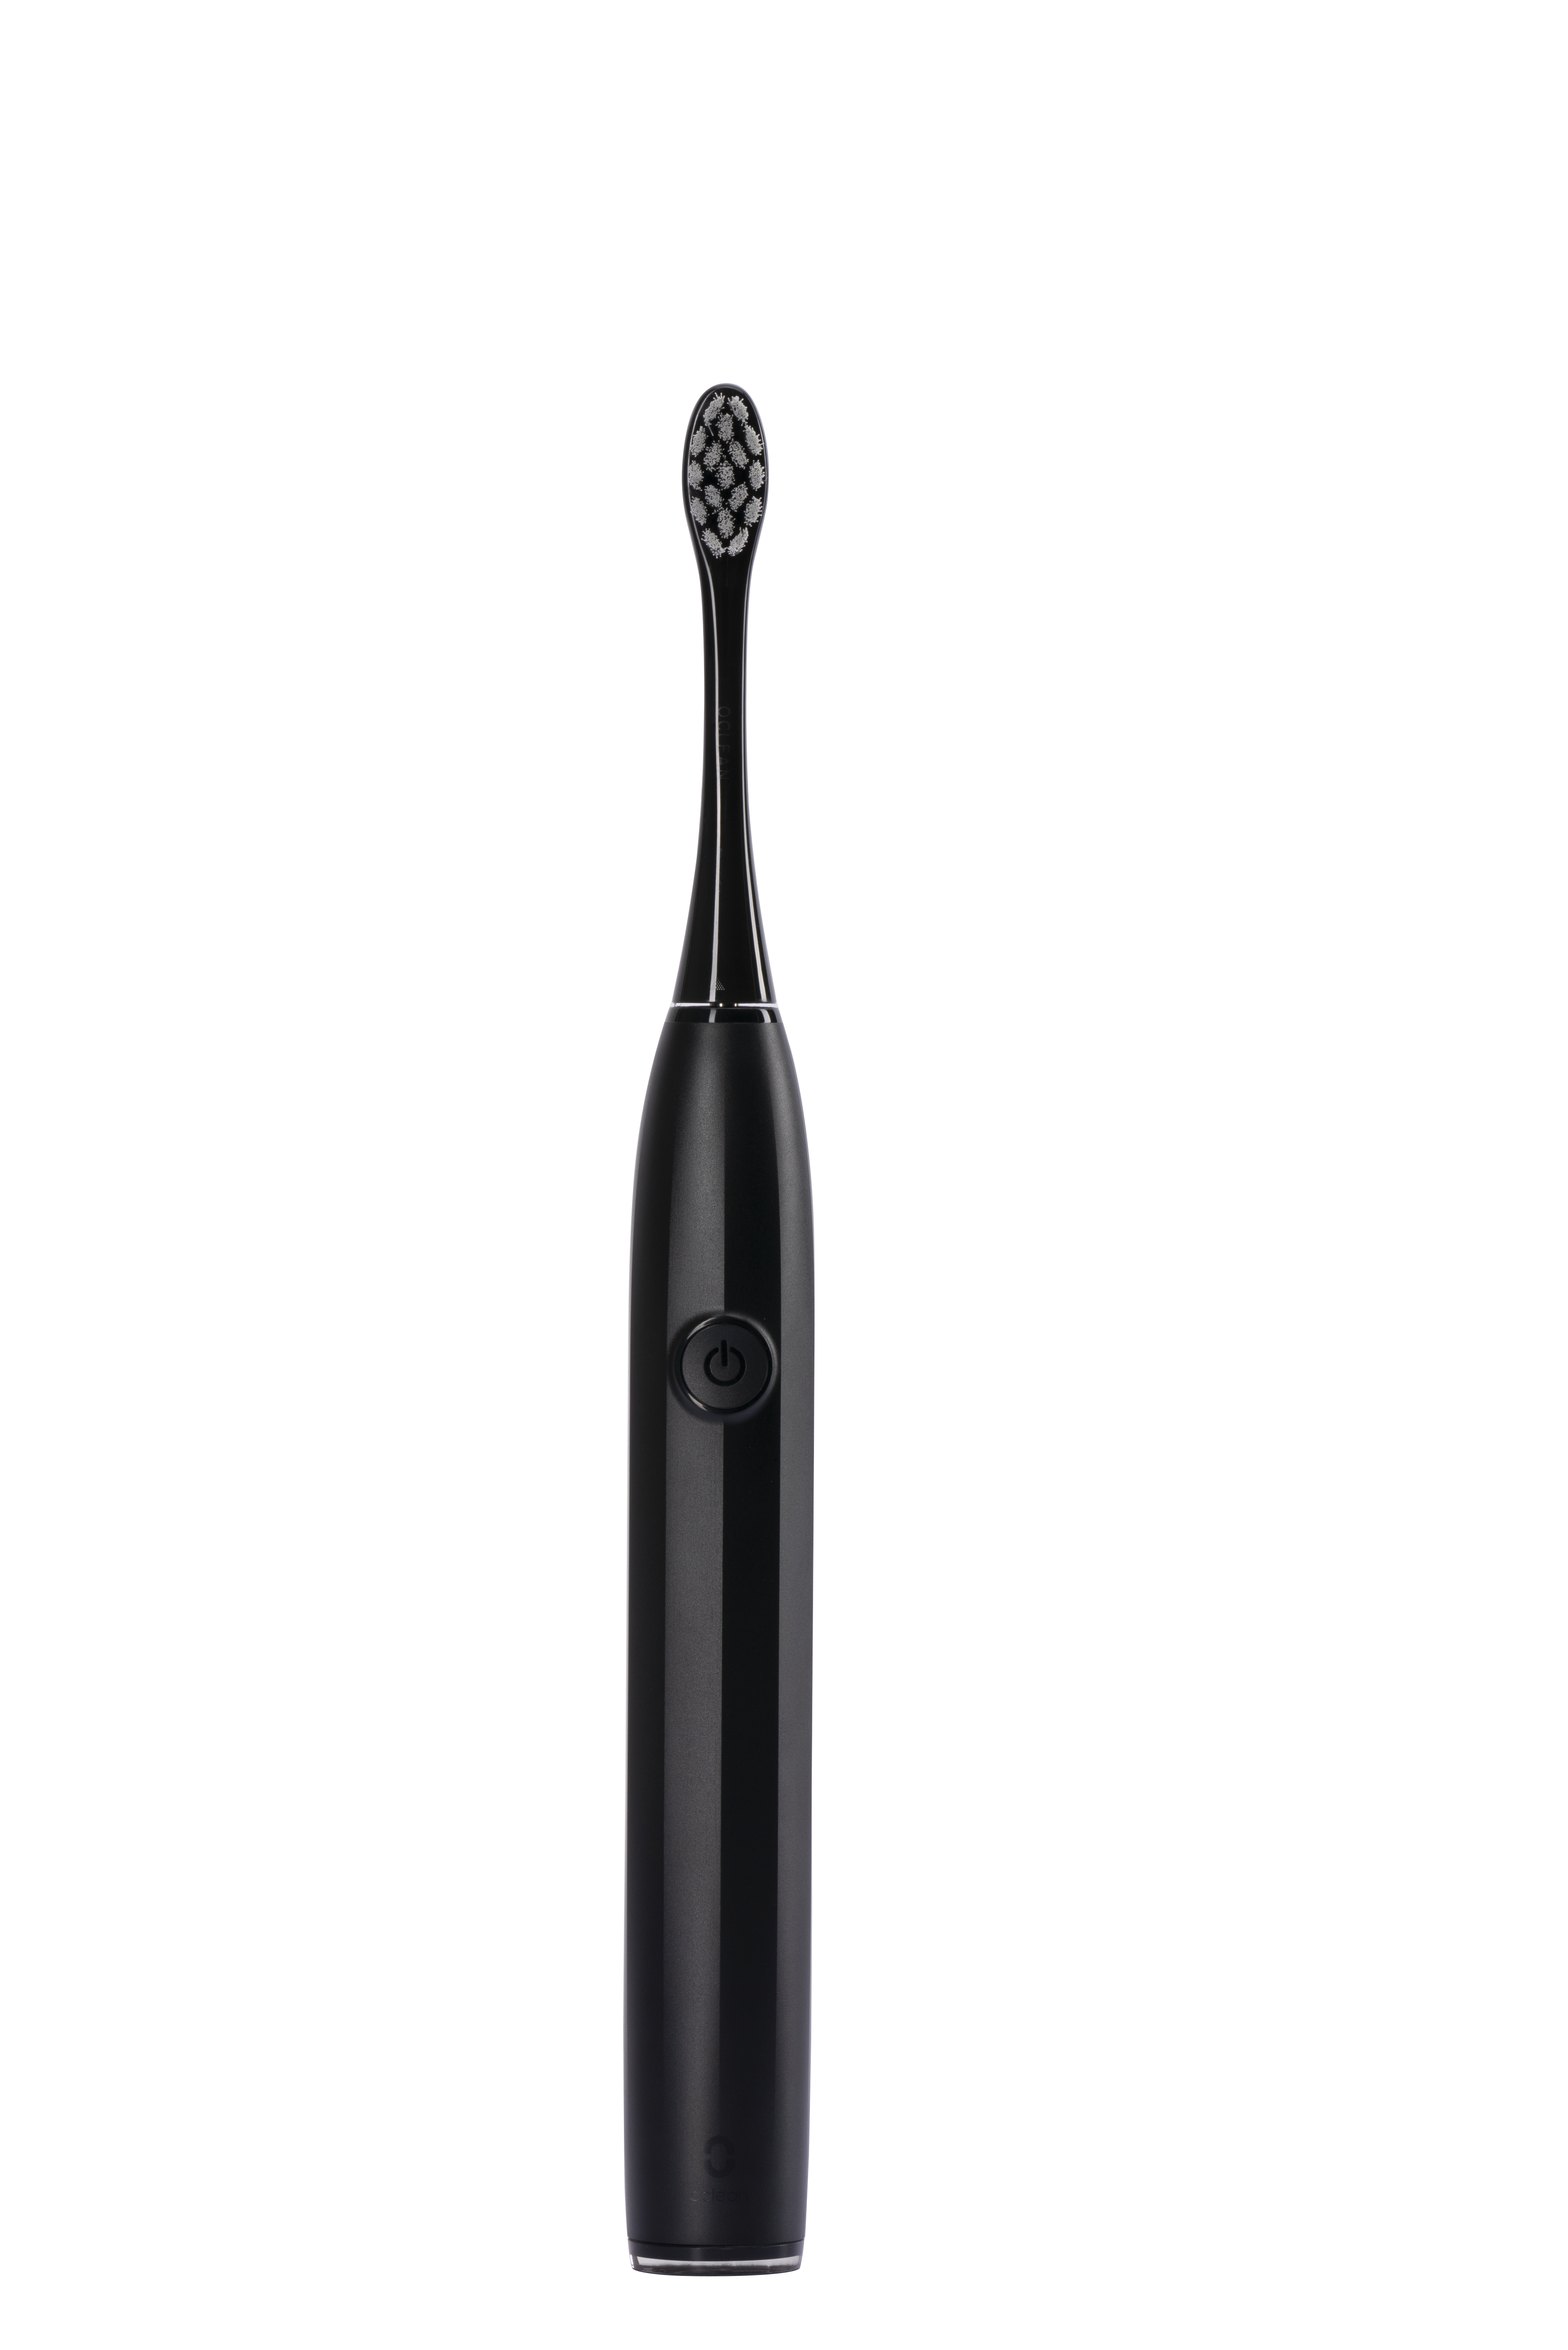 Oclean Endurance Sonic Electric Toothbrush C01000360